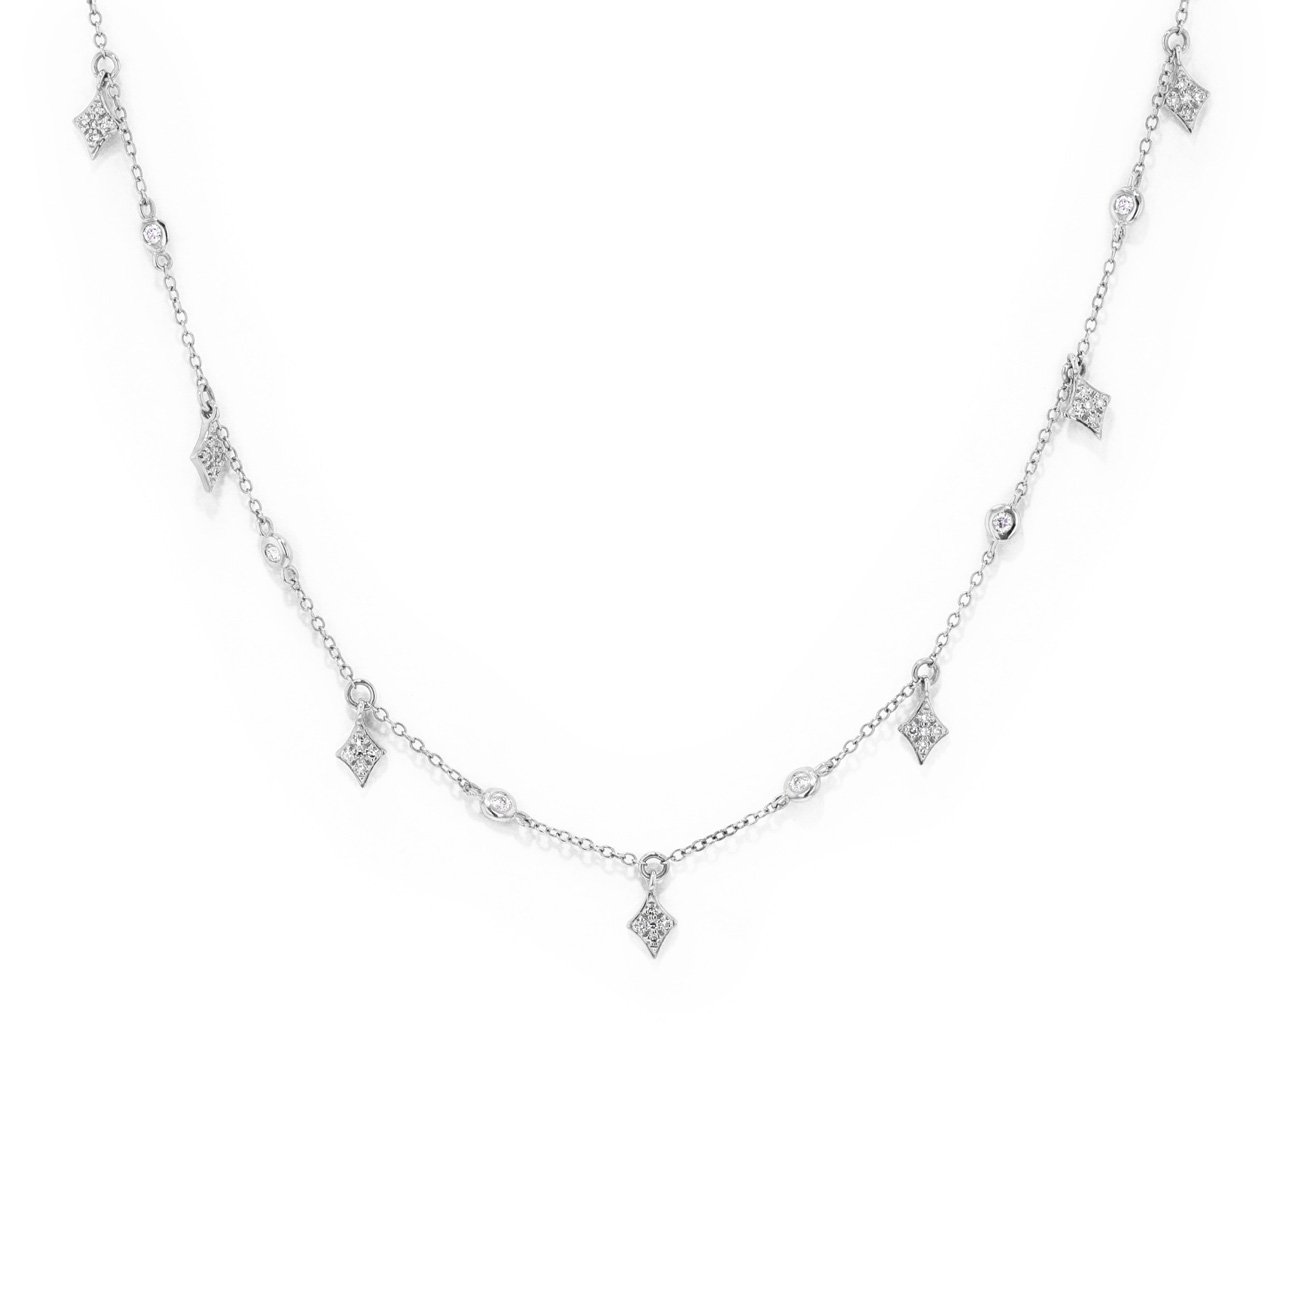 Diamond Drops Necklace Necklaces Princess Bride Diamonds 14K White Gold 